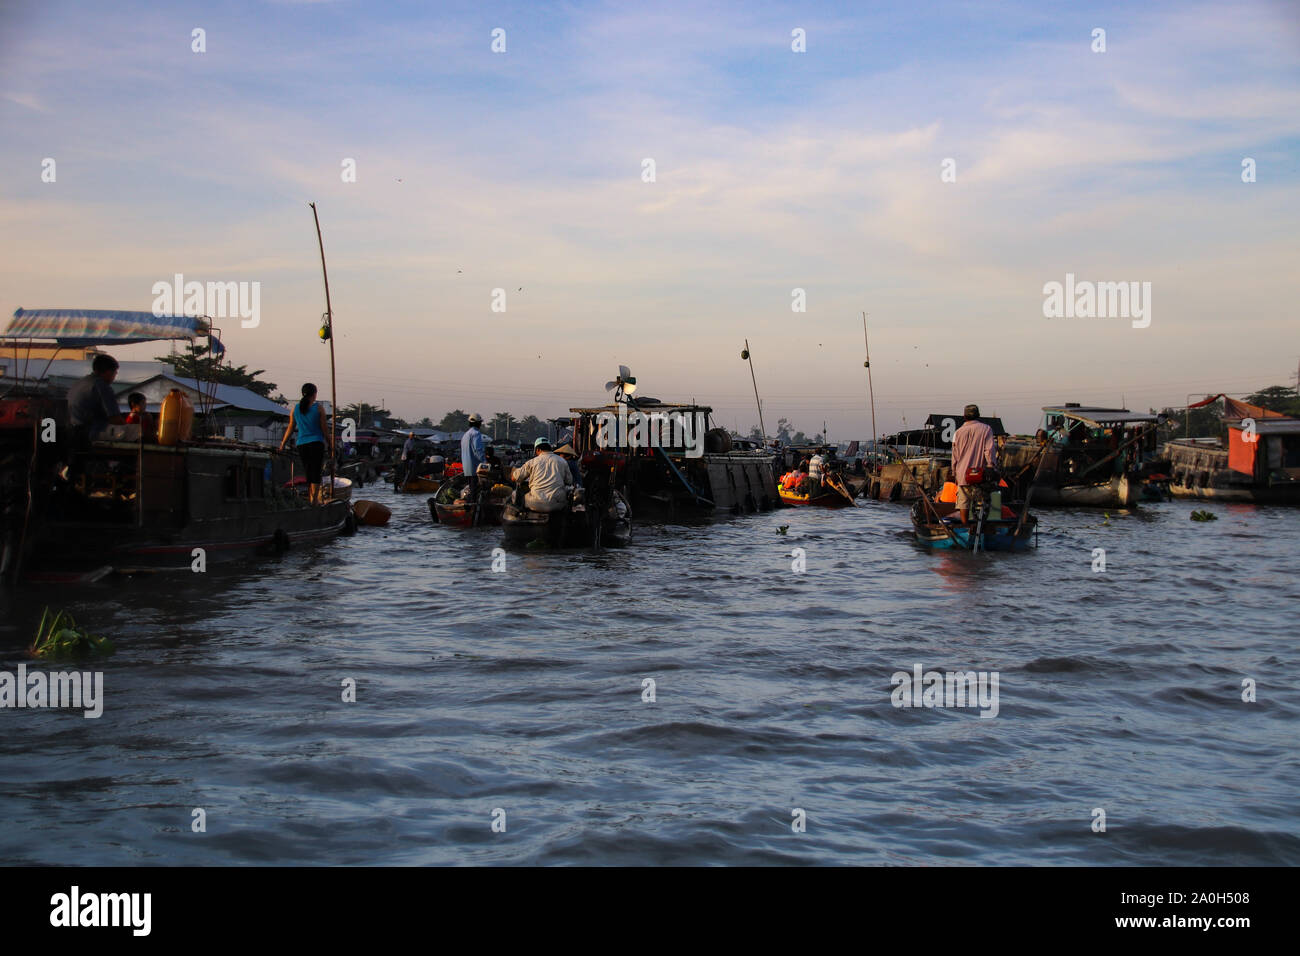 Traditionelle vietnamesische Floating Market genannt. Rang Ca in Can Tho, Vietnam Stockfoto